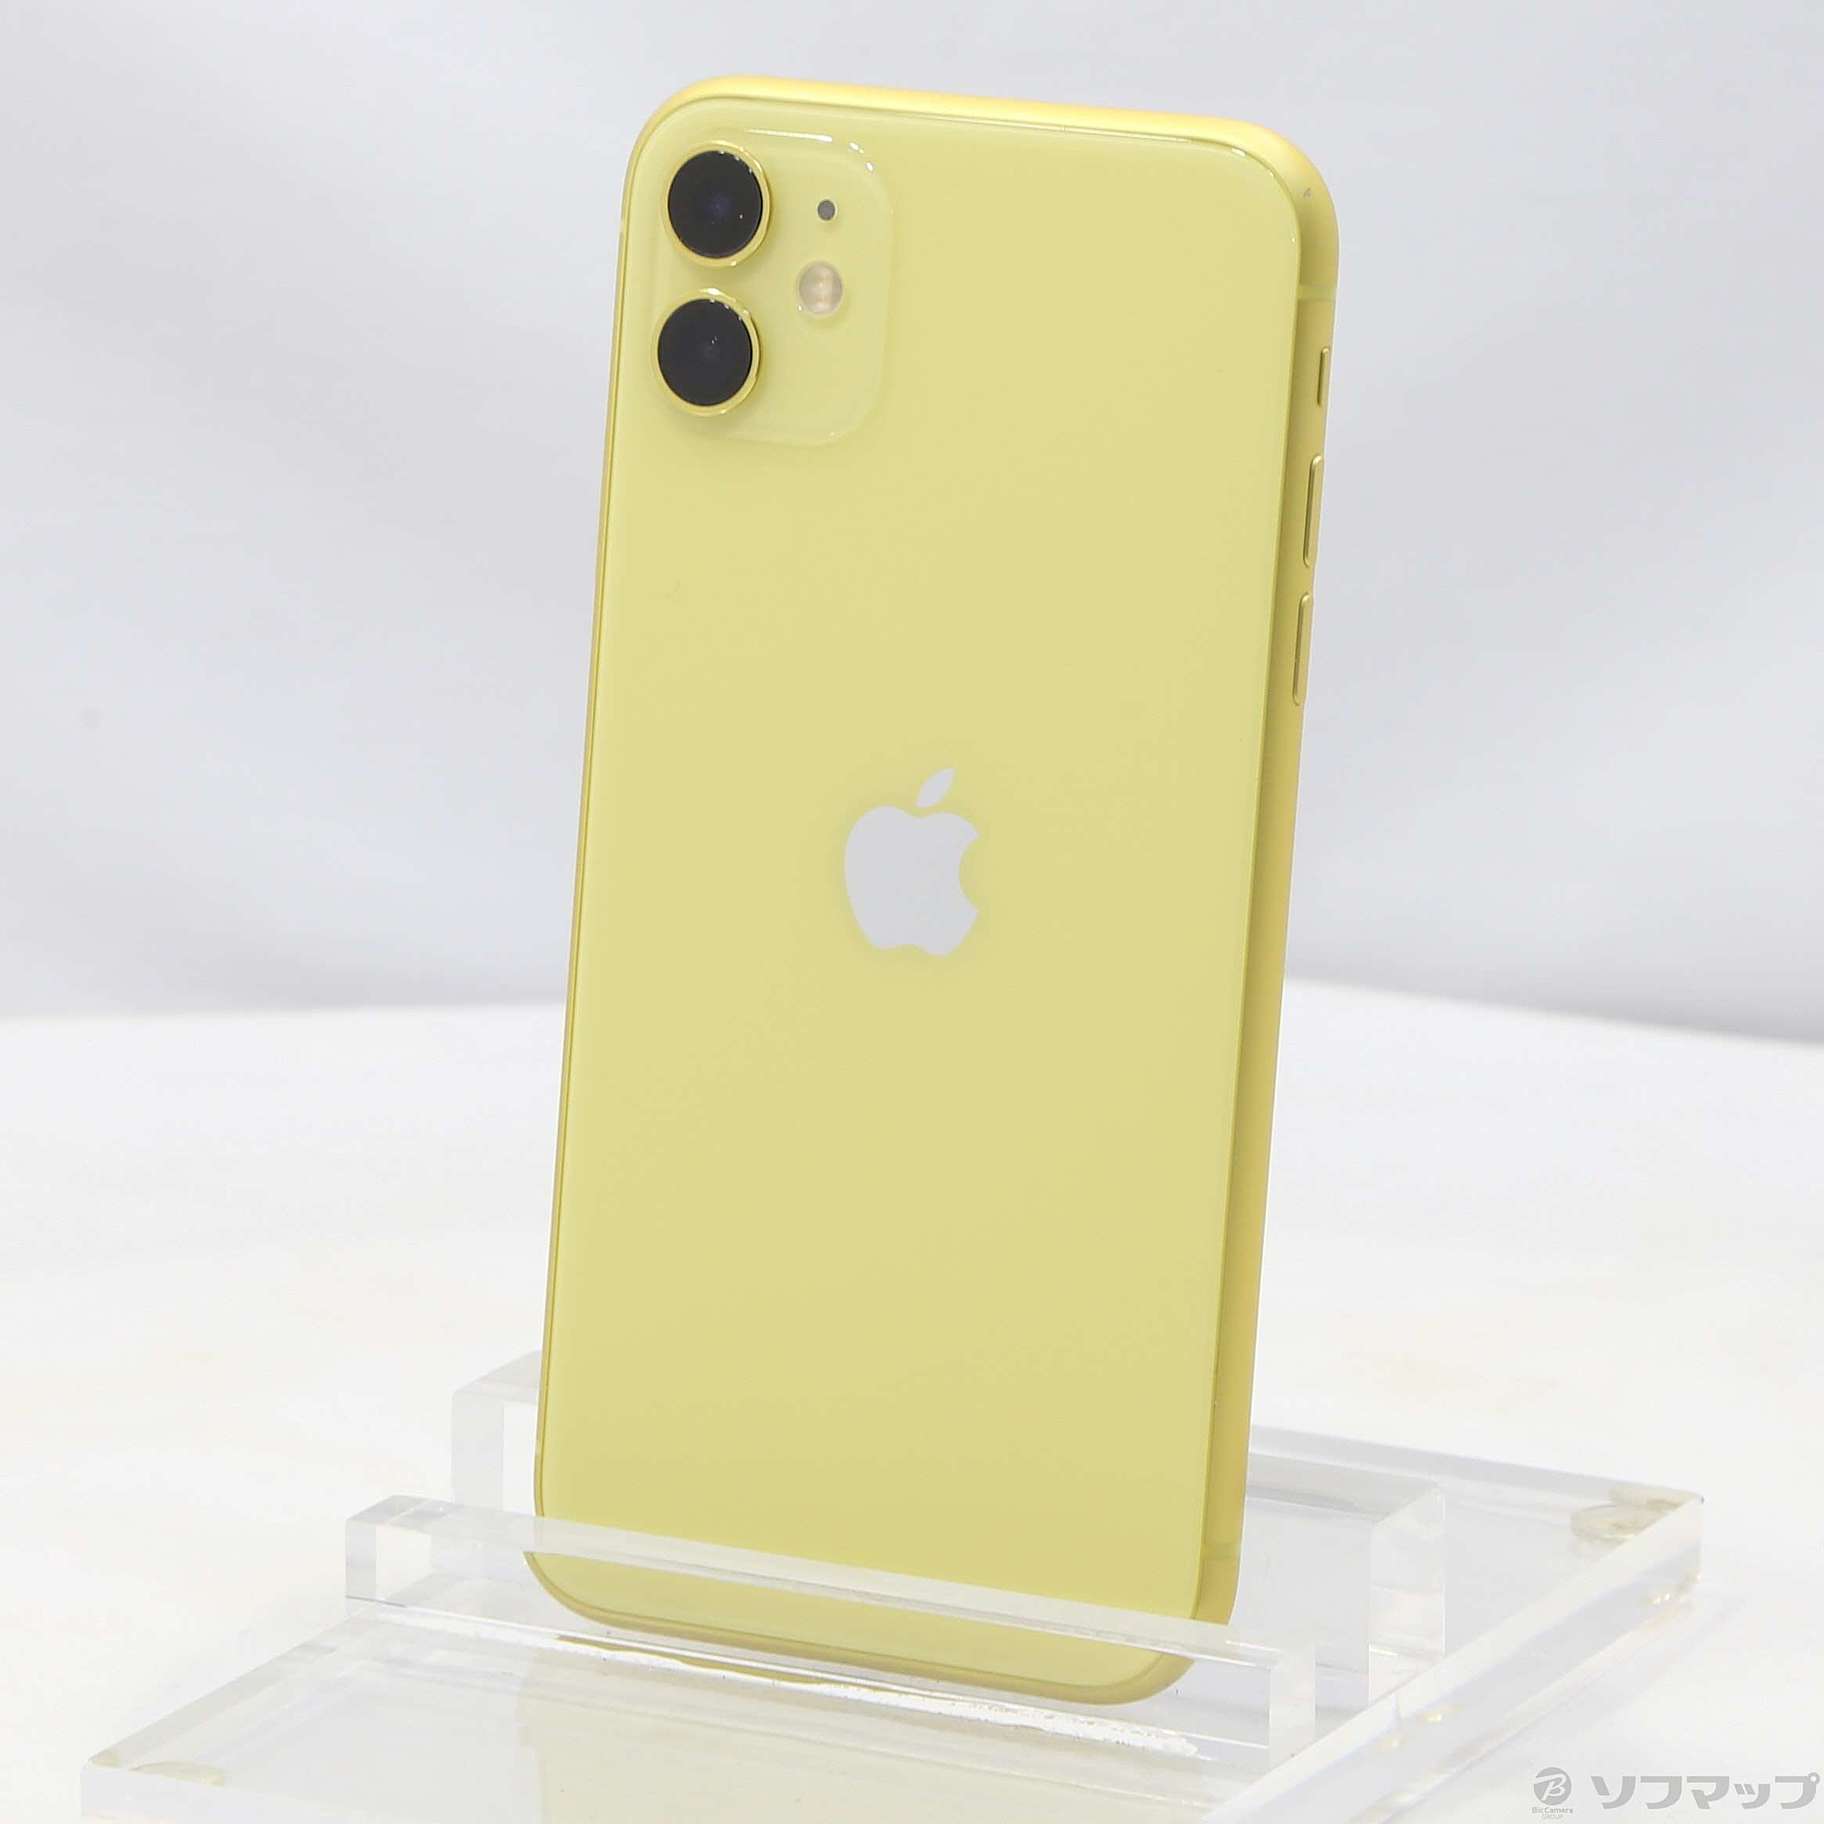 iPhone 11 イエロー 64 GB Softbank-lantryaestheticscenter.com